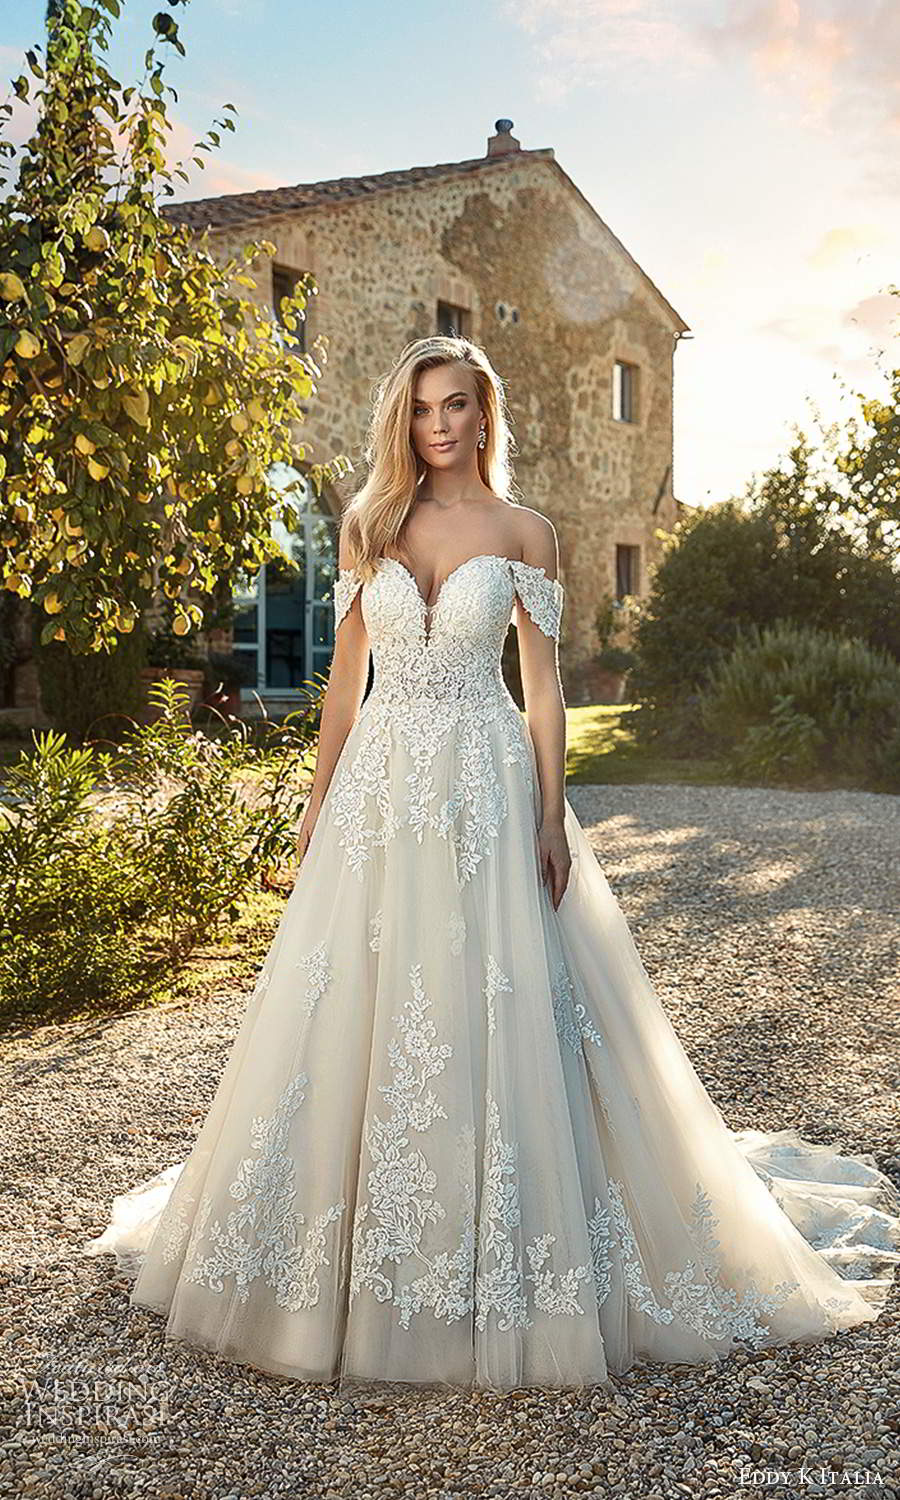 eddy k 2021 italia bridal off shoulder straps sweetheart neckline embellished bodice a line ball gown wedding dress chapel train (19) mv